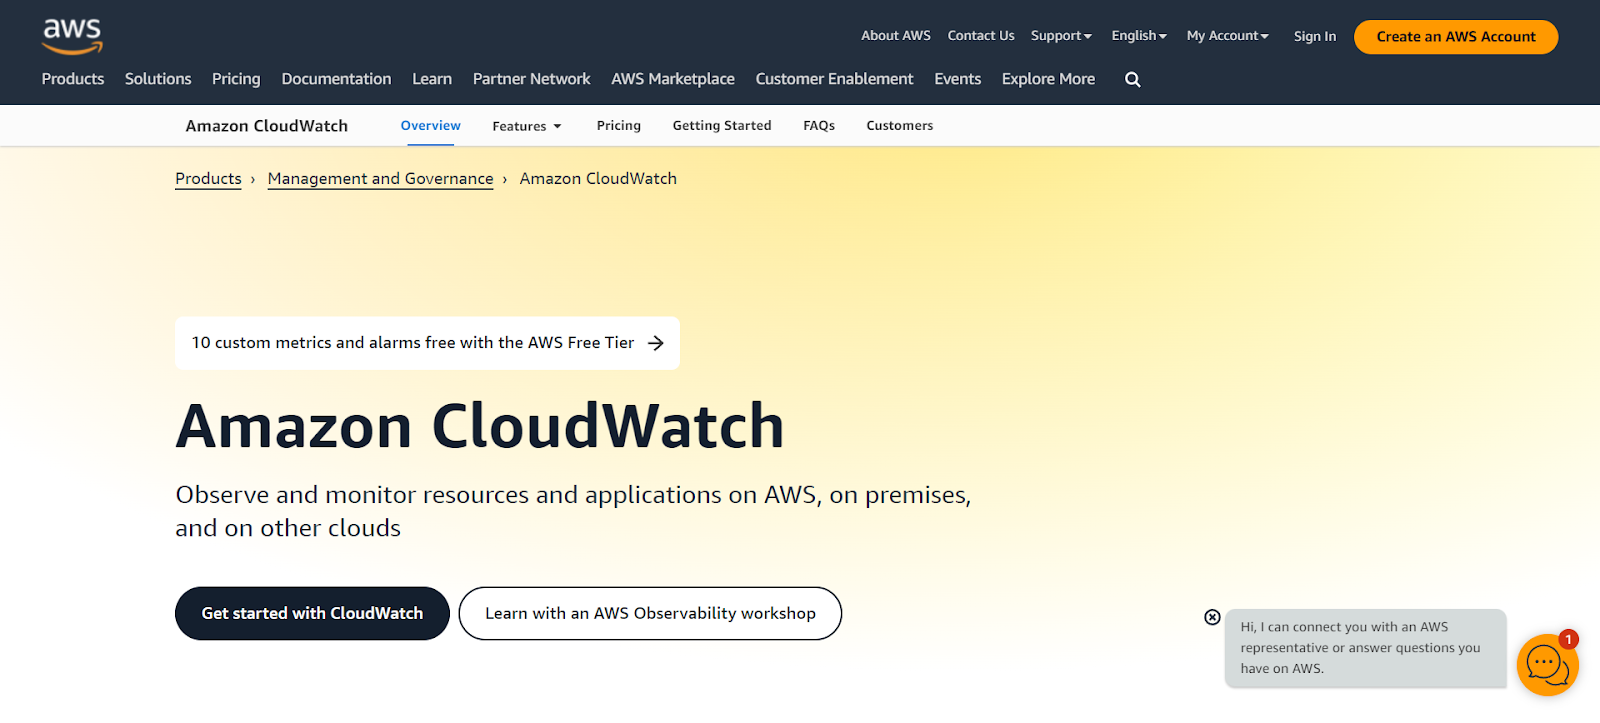 A screenshot of Amazon CloudWatch's website